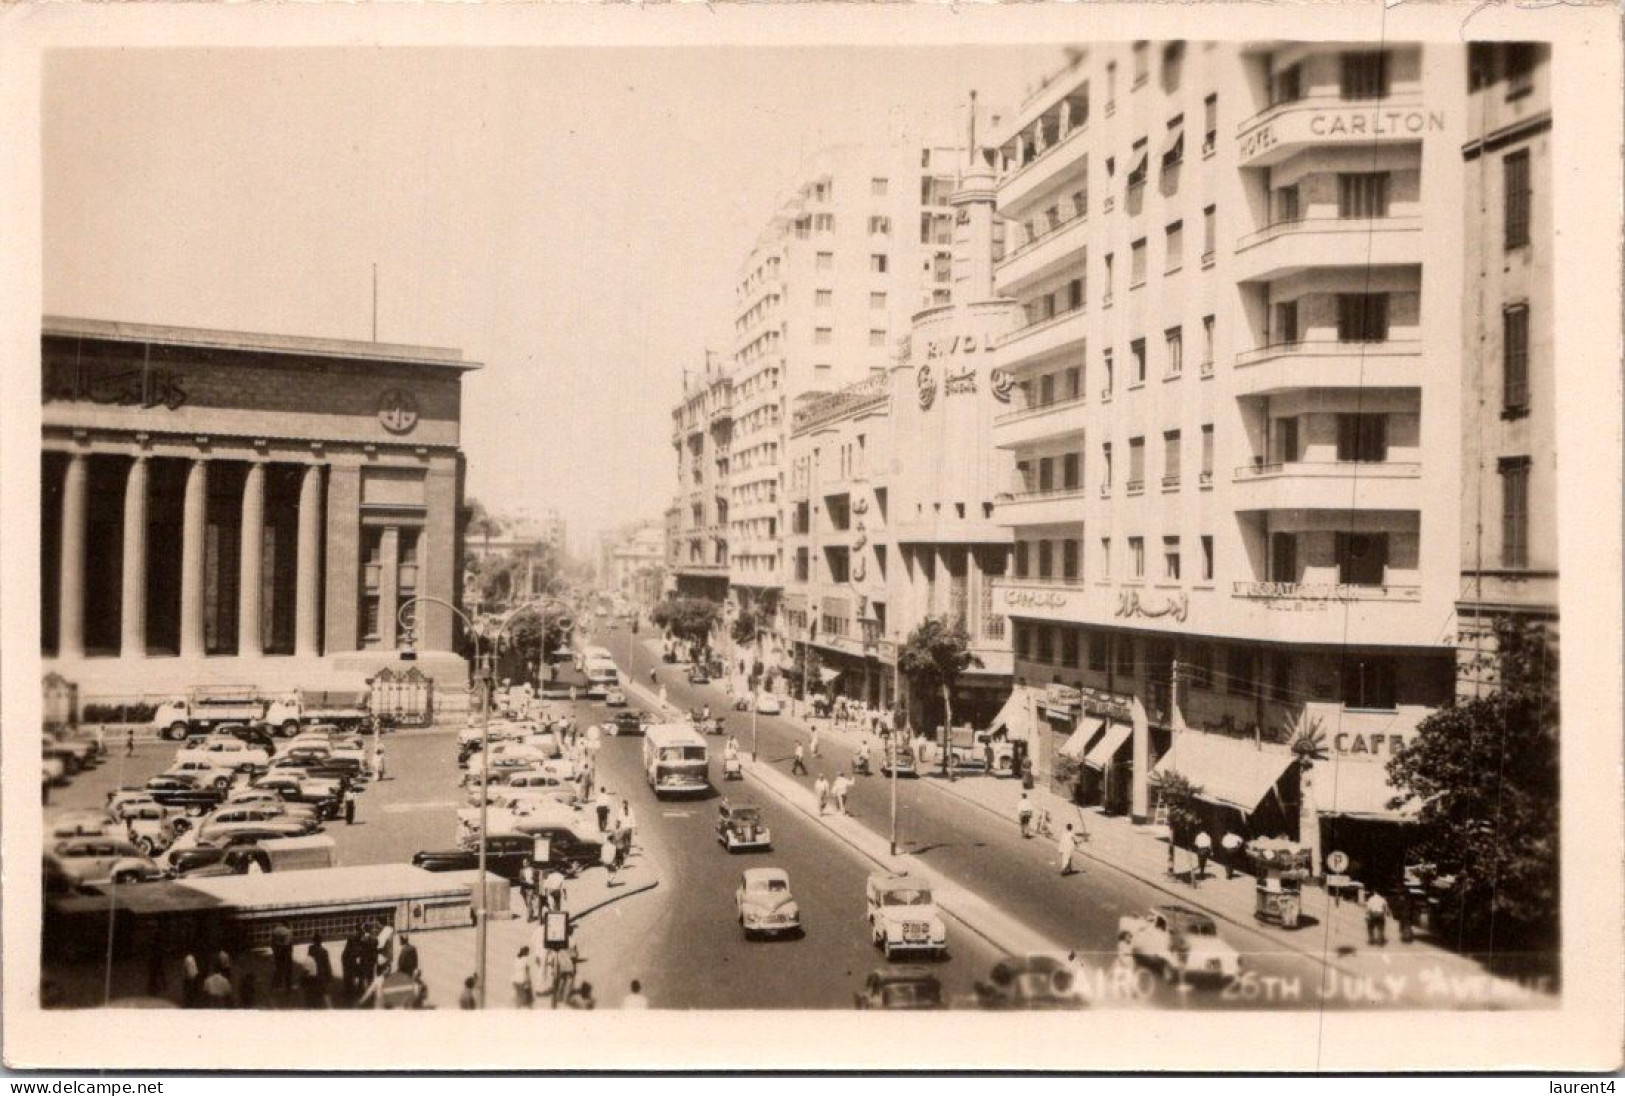 18-5-2024 (5 Z 28) Egypt (b/w Very Old) Cairo 26th July Street - Kairo